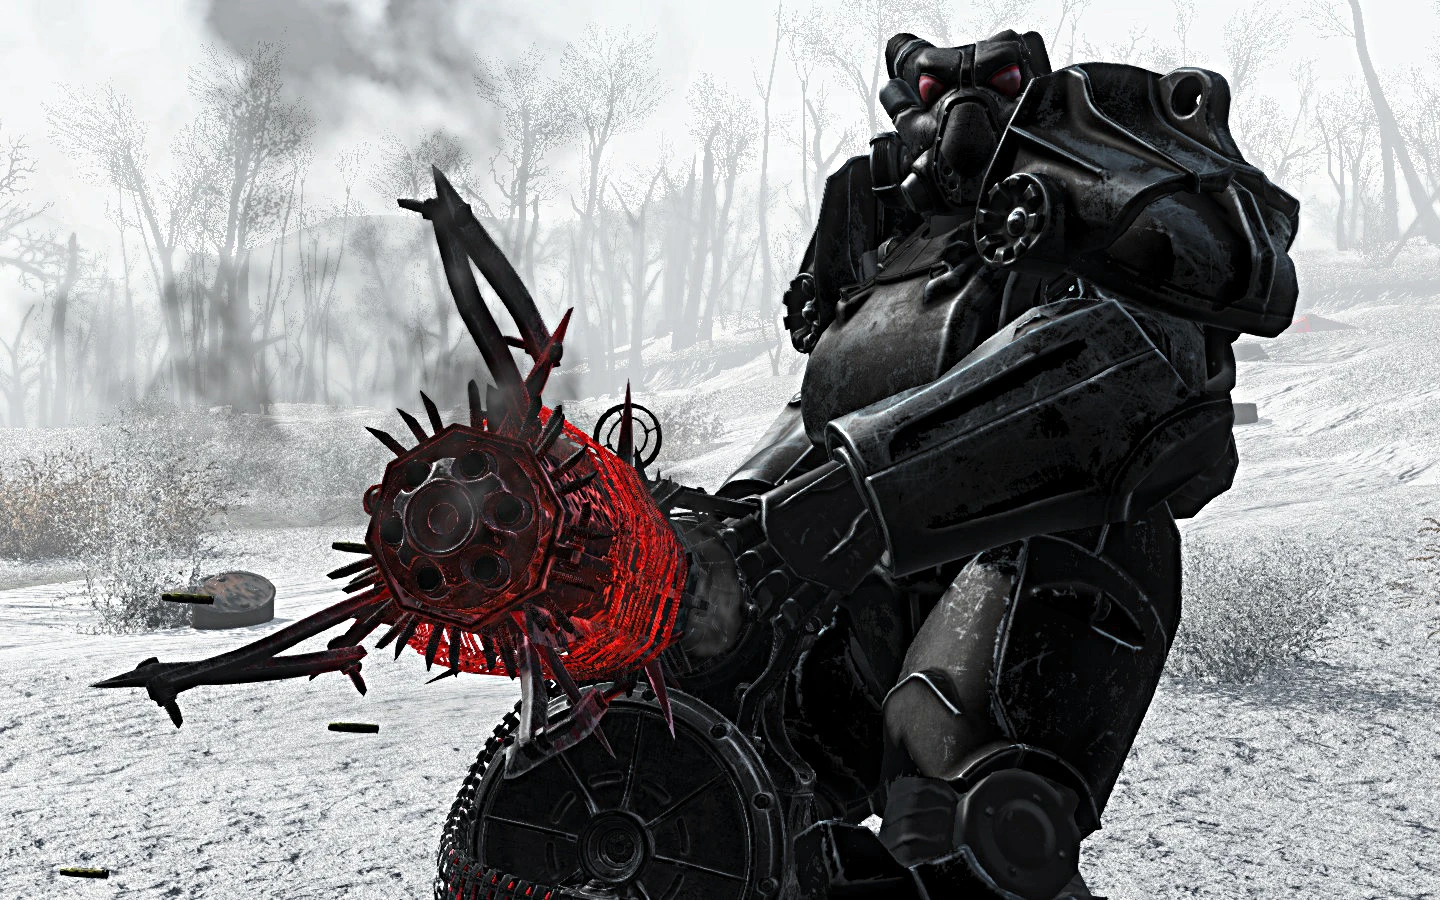 BULLET HELL BLOODY MINIGUN  at Fallout  4  Nexus Mods and 